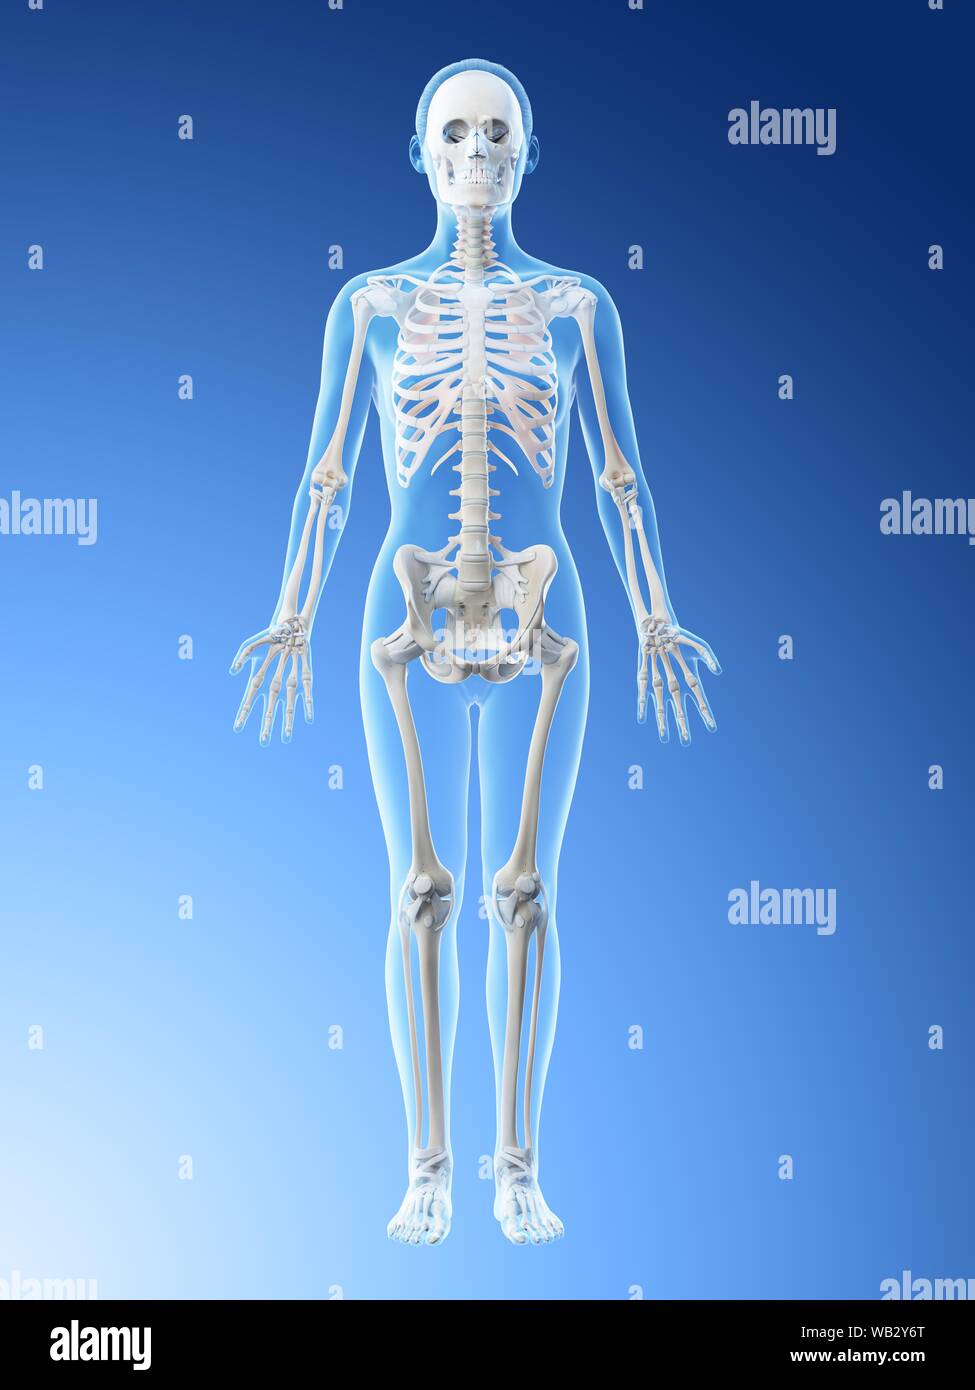 Female skeleton and ligaments, computer illustration Stock Photo - Alamy